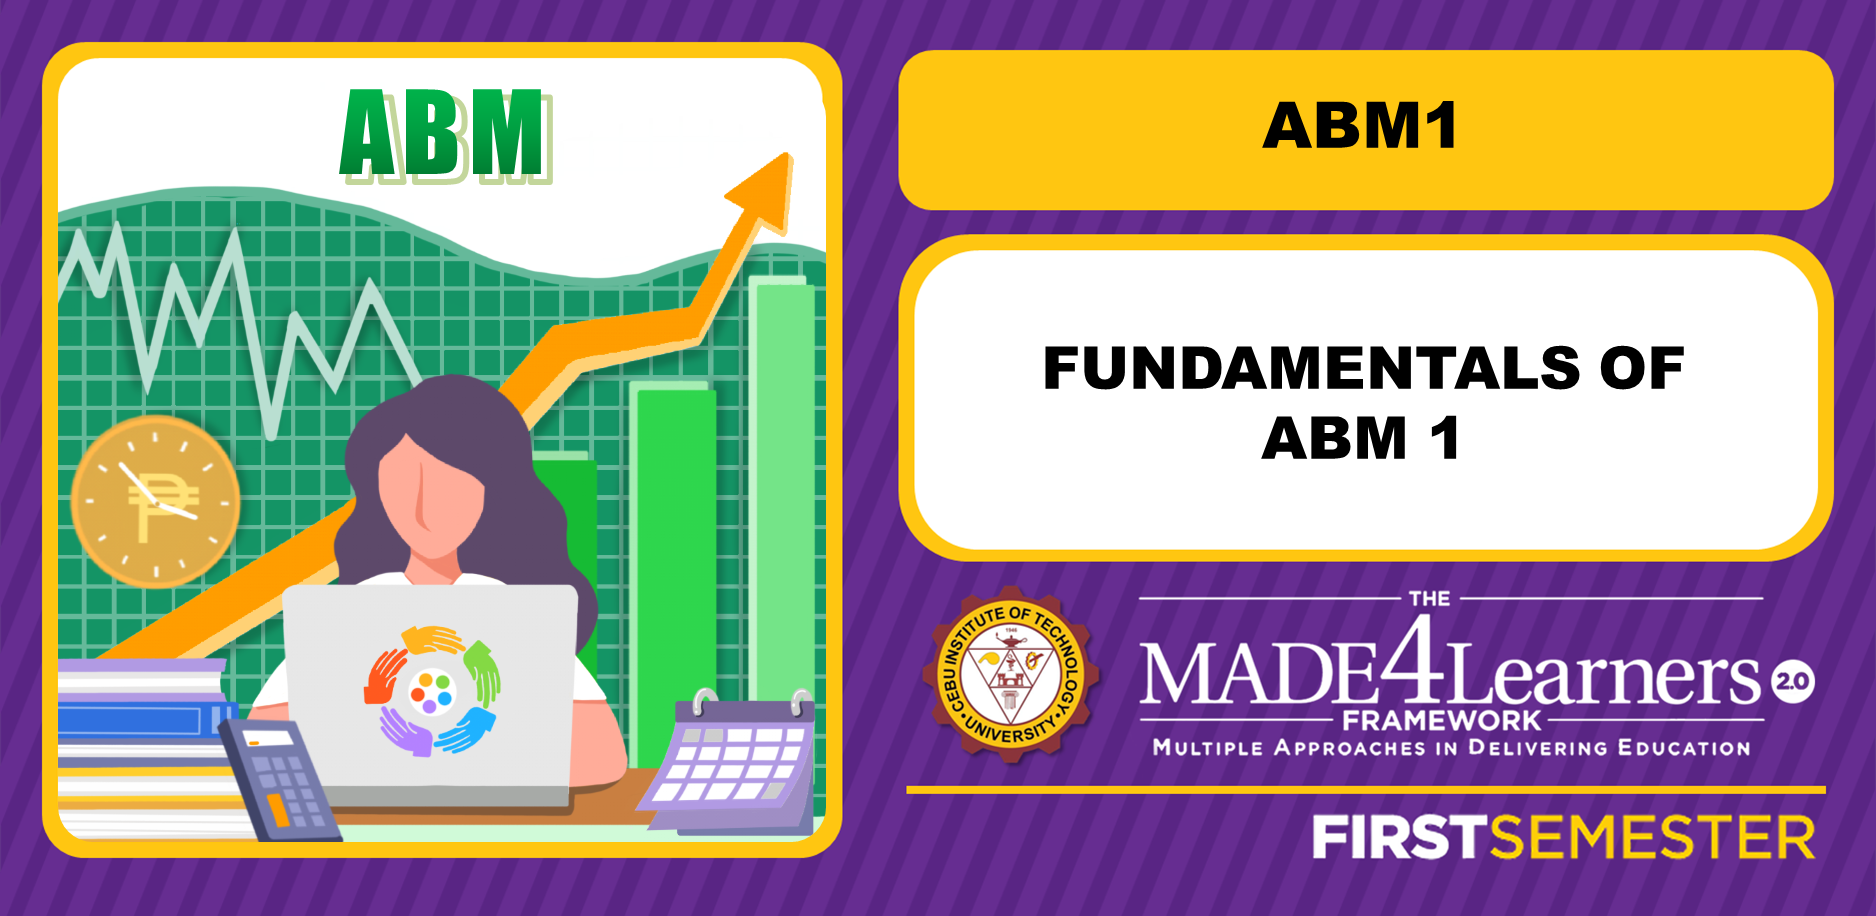 ABM1: Fundamentals of ABM 1